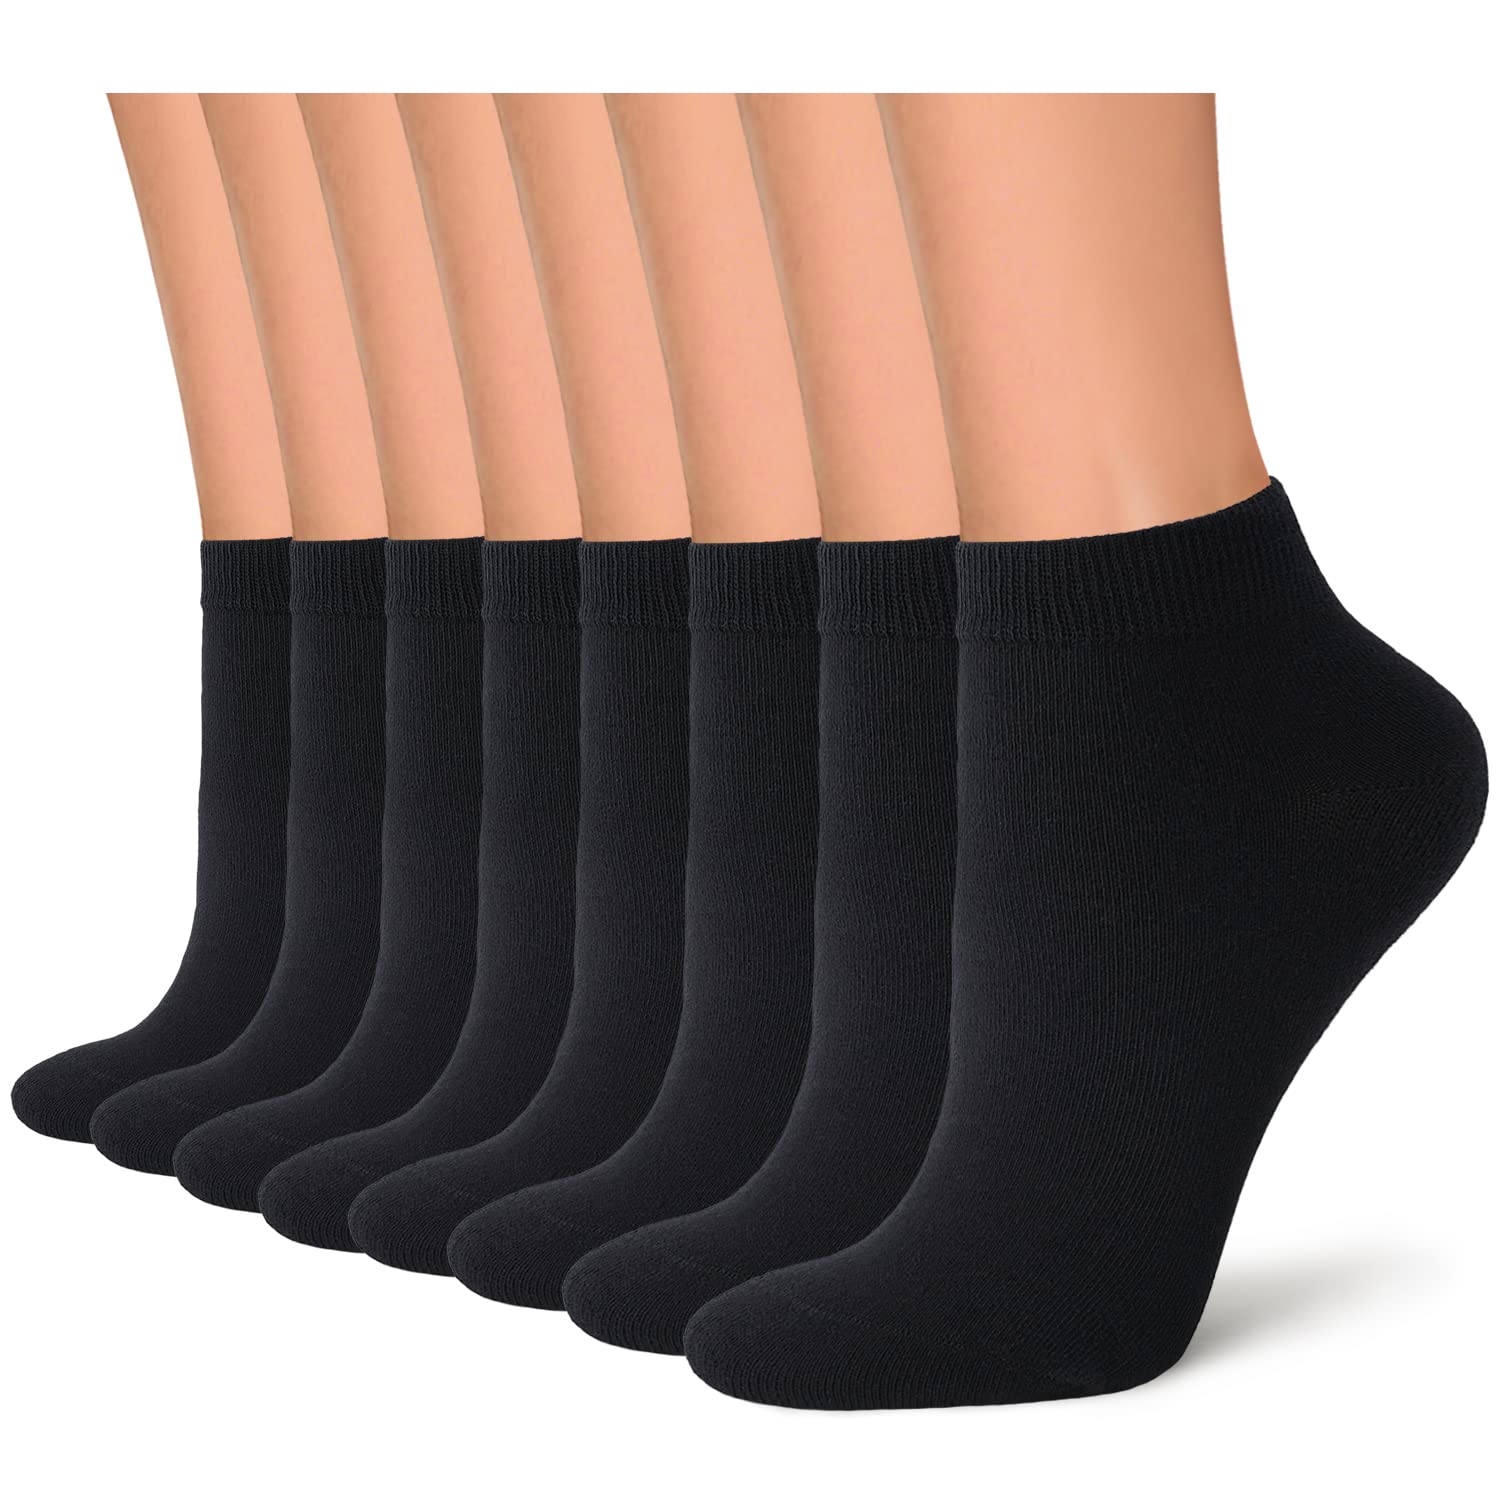 8 Pairs Ankle Socks for Women Cotton Socks Non Slip Classic No Show Socks  Casual Low Cut Socks 01 Black/Black/Black/Black/Black/Black/Black/Black